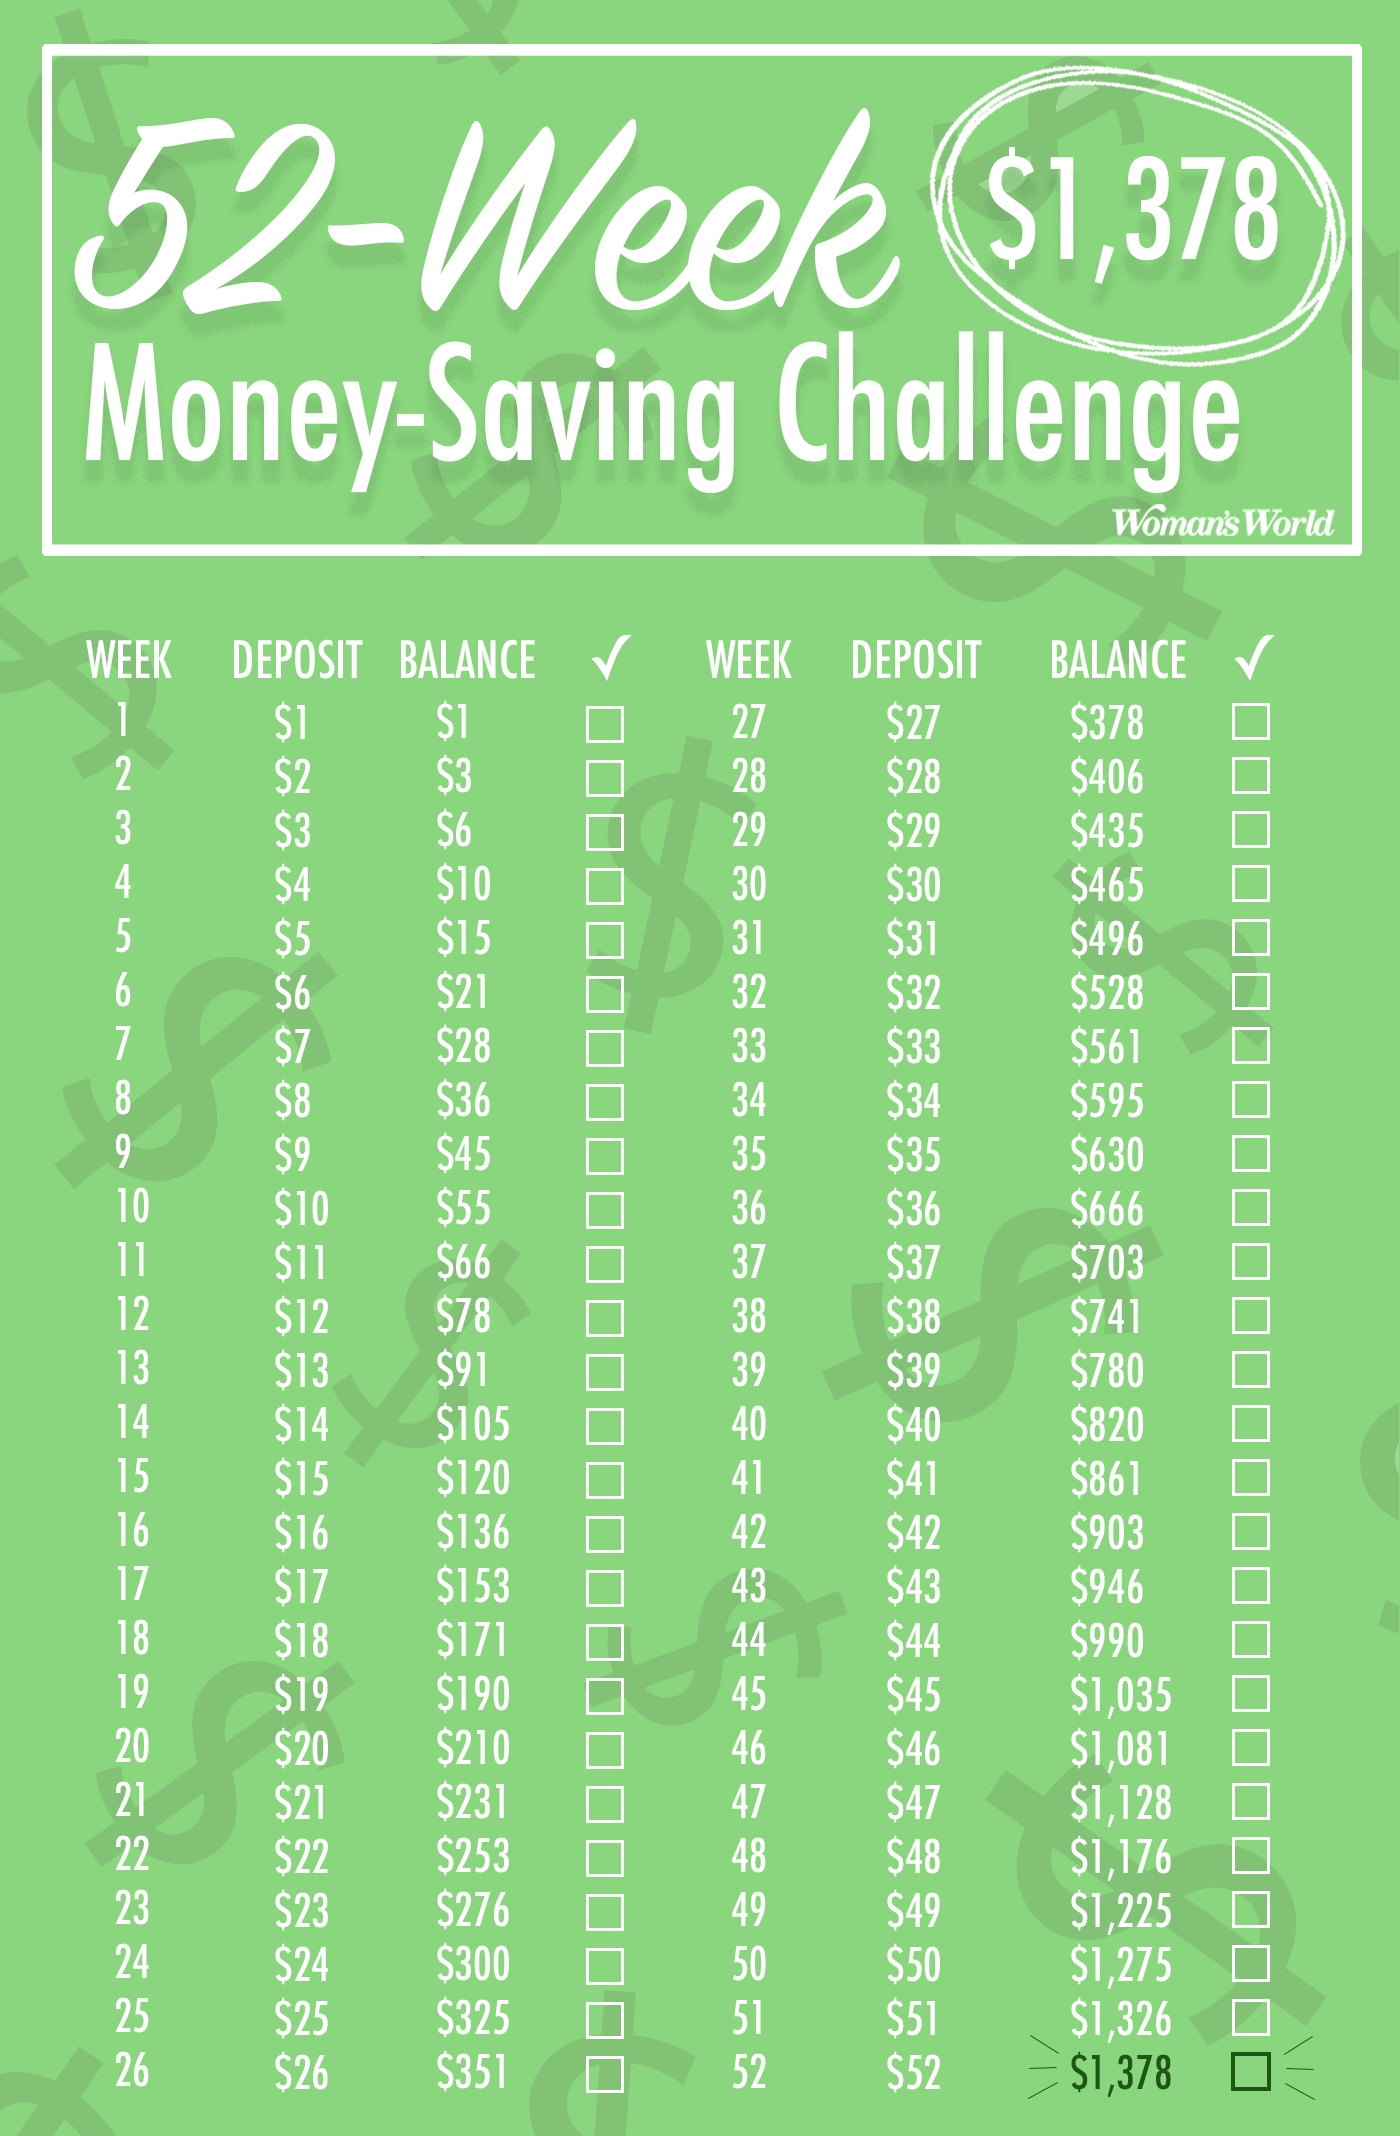 52-Week Money-Saving Challenge: $1,378